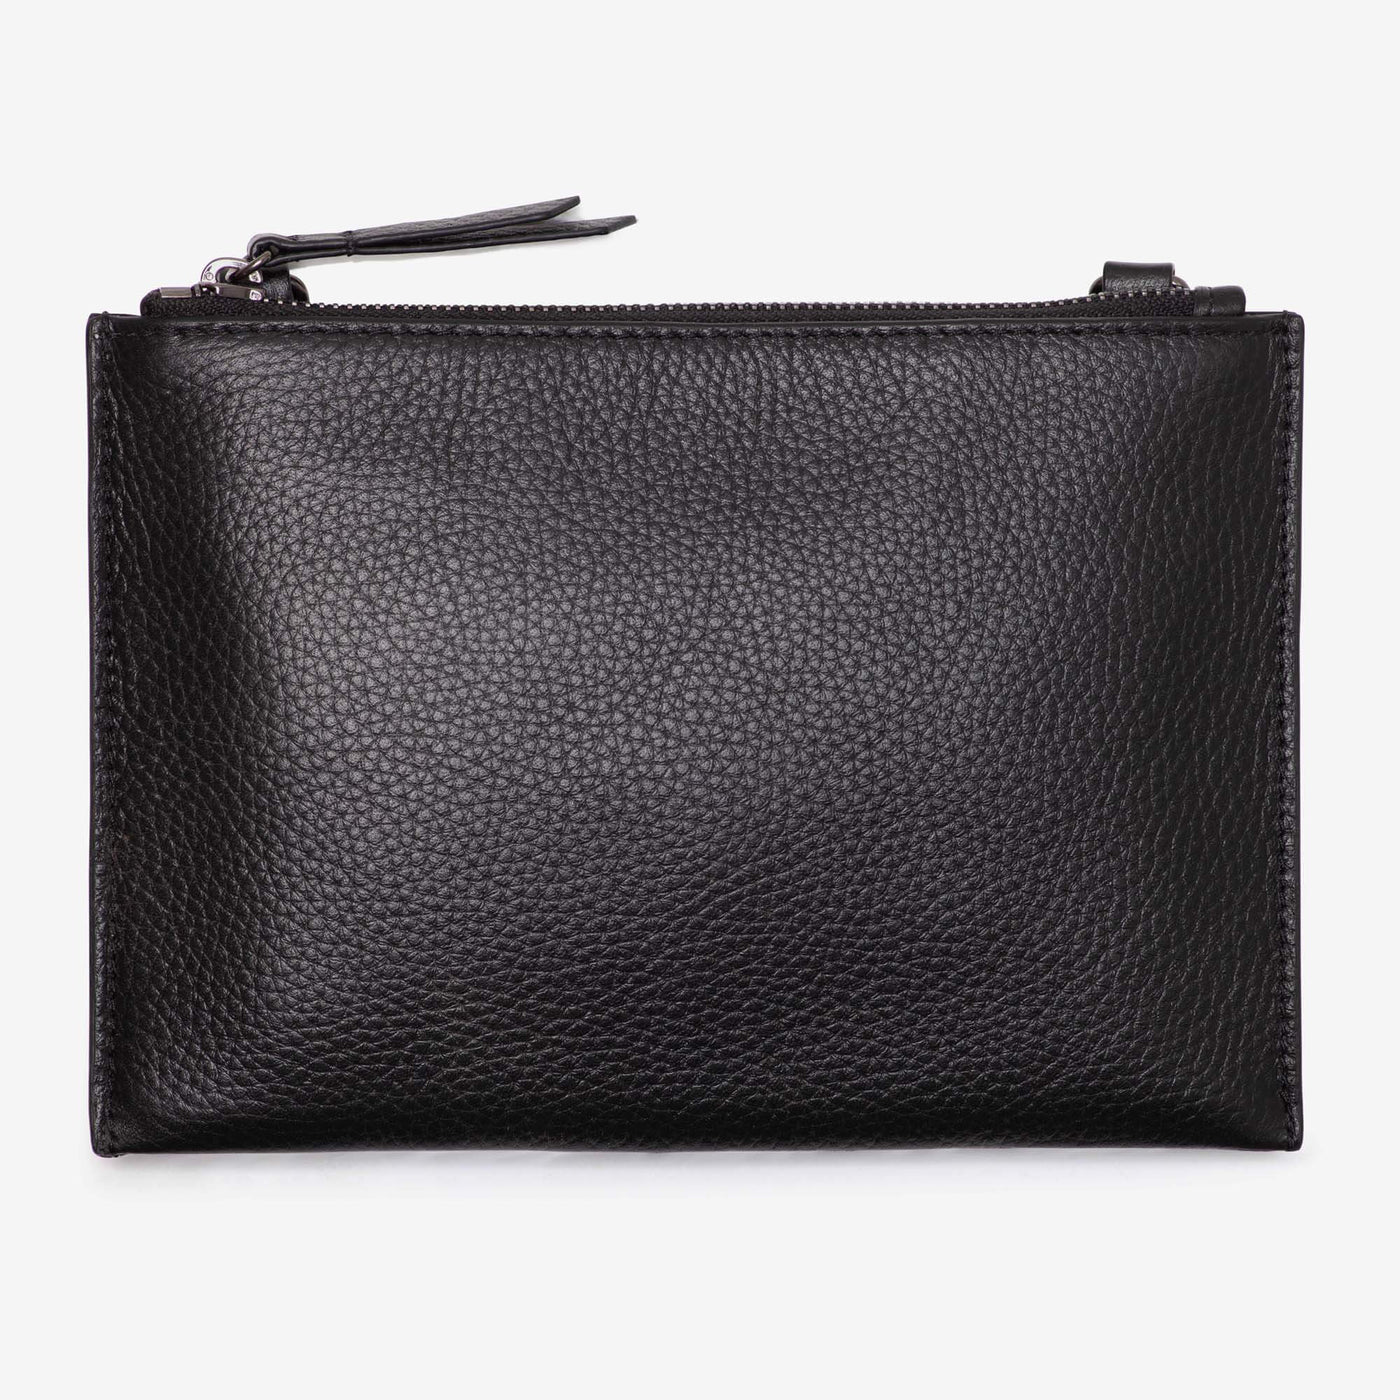 Leather Mini Clutch + Leather Key Ring/ Bag Tassel Gift Set – Black